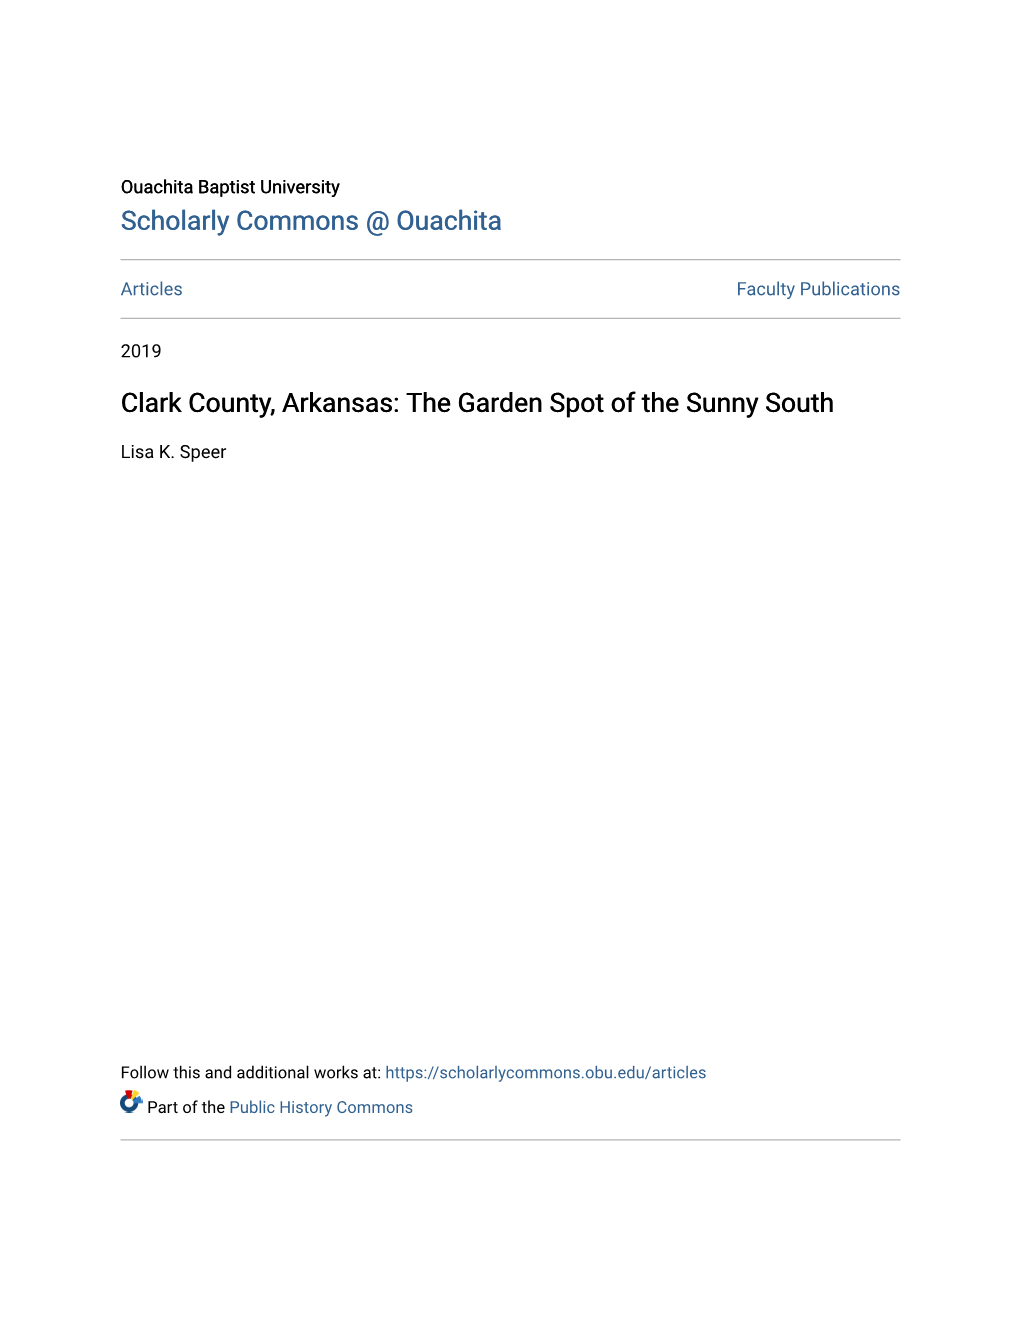 Clark County, Arkansas: the Garden Spot of the Sunny South